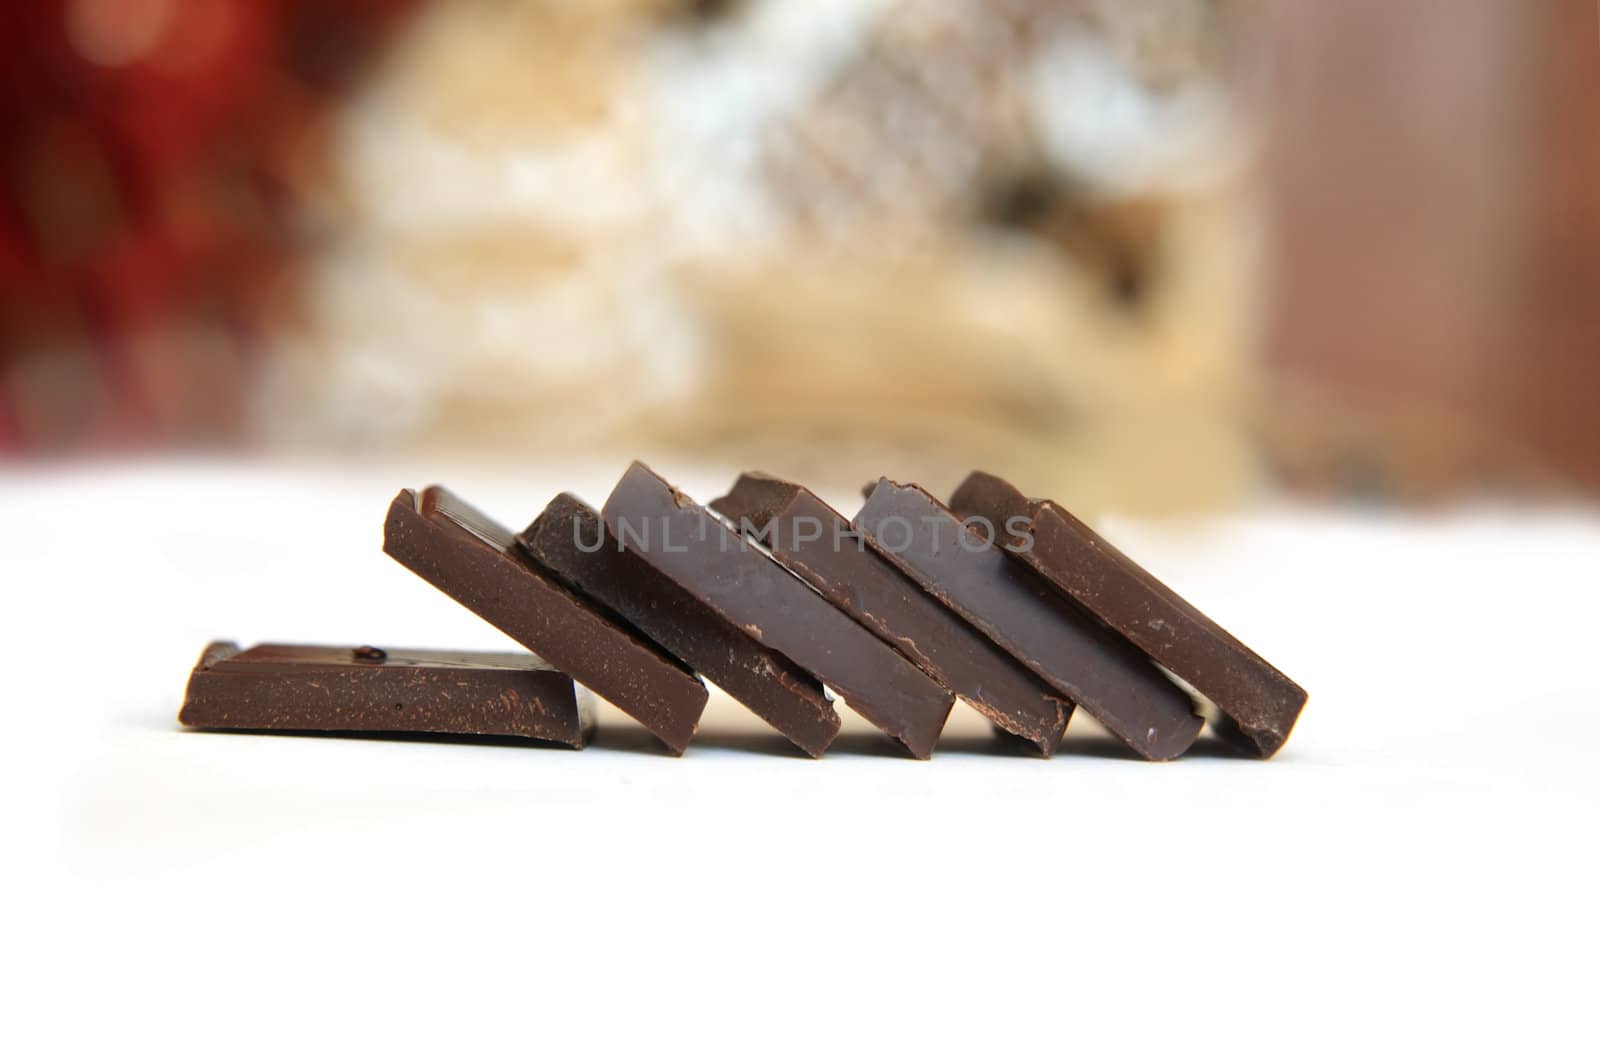 Chocolate pieces by Kudryashka